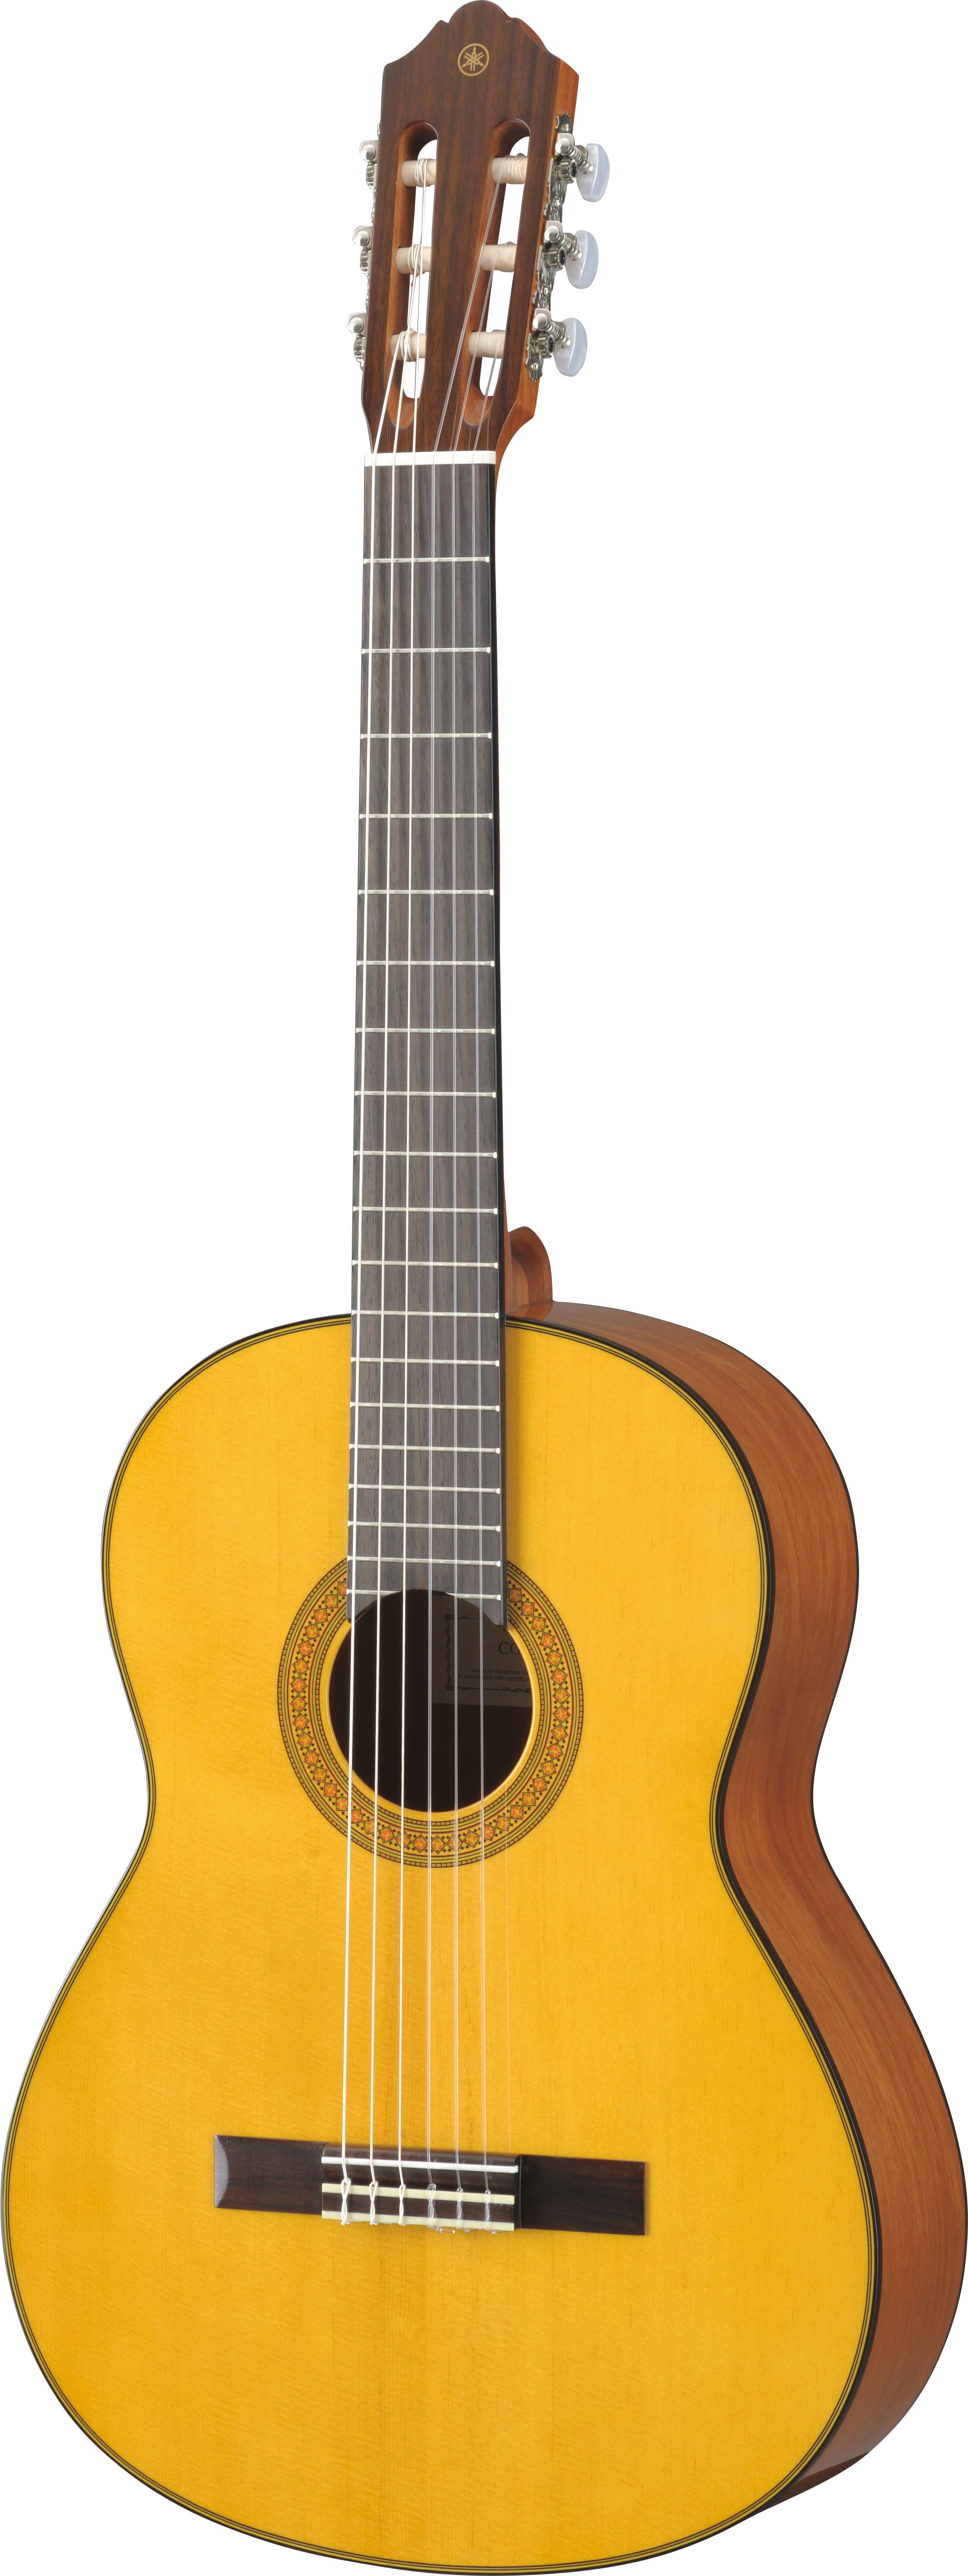 Yamaha CG142S - Klassisk gitar